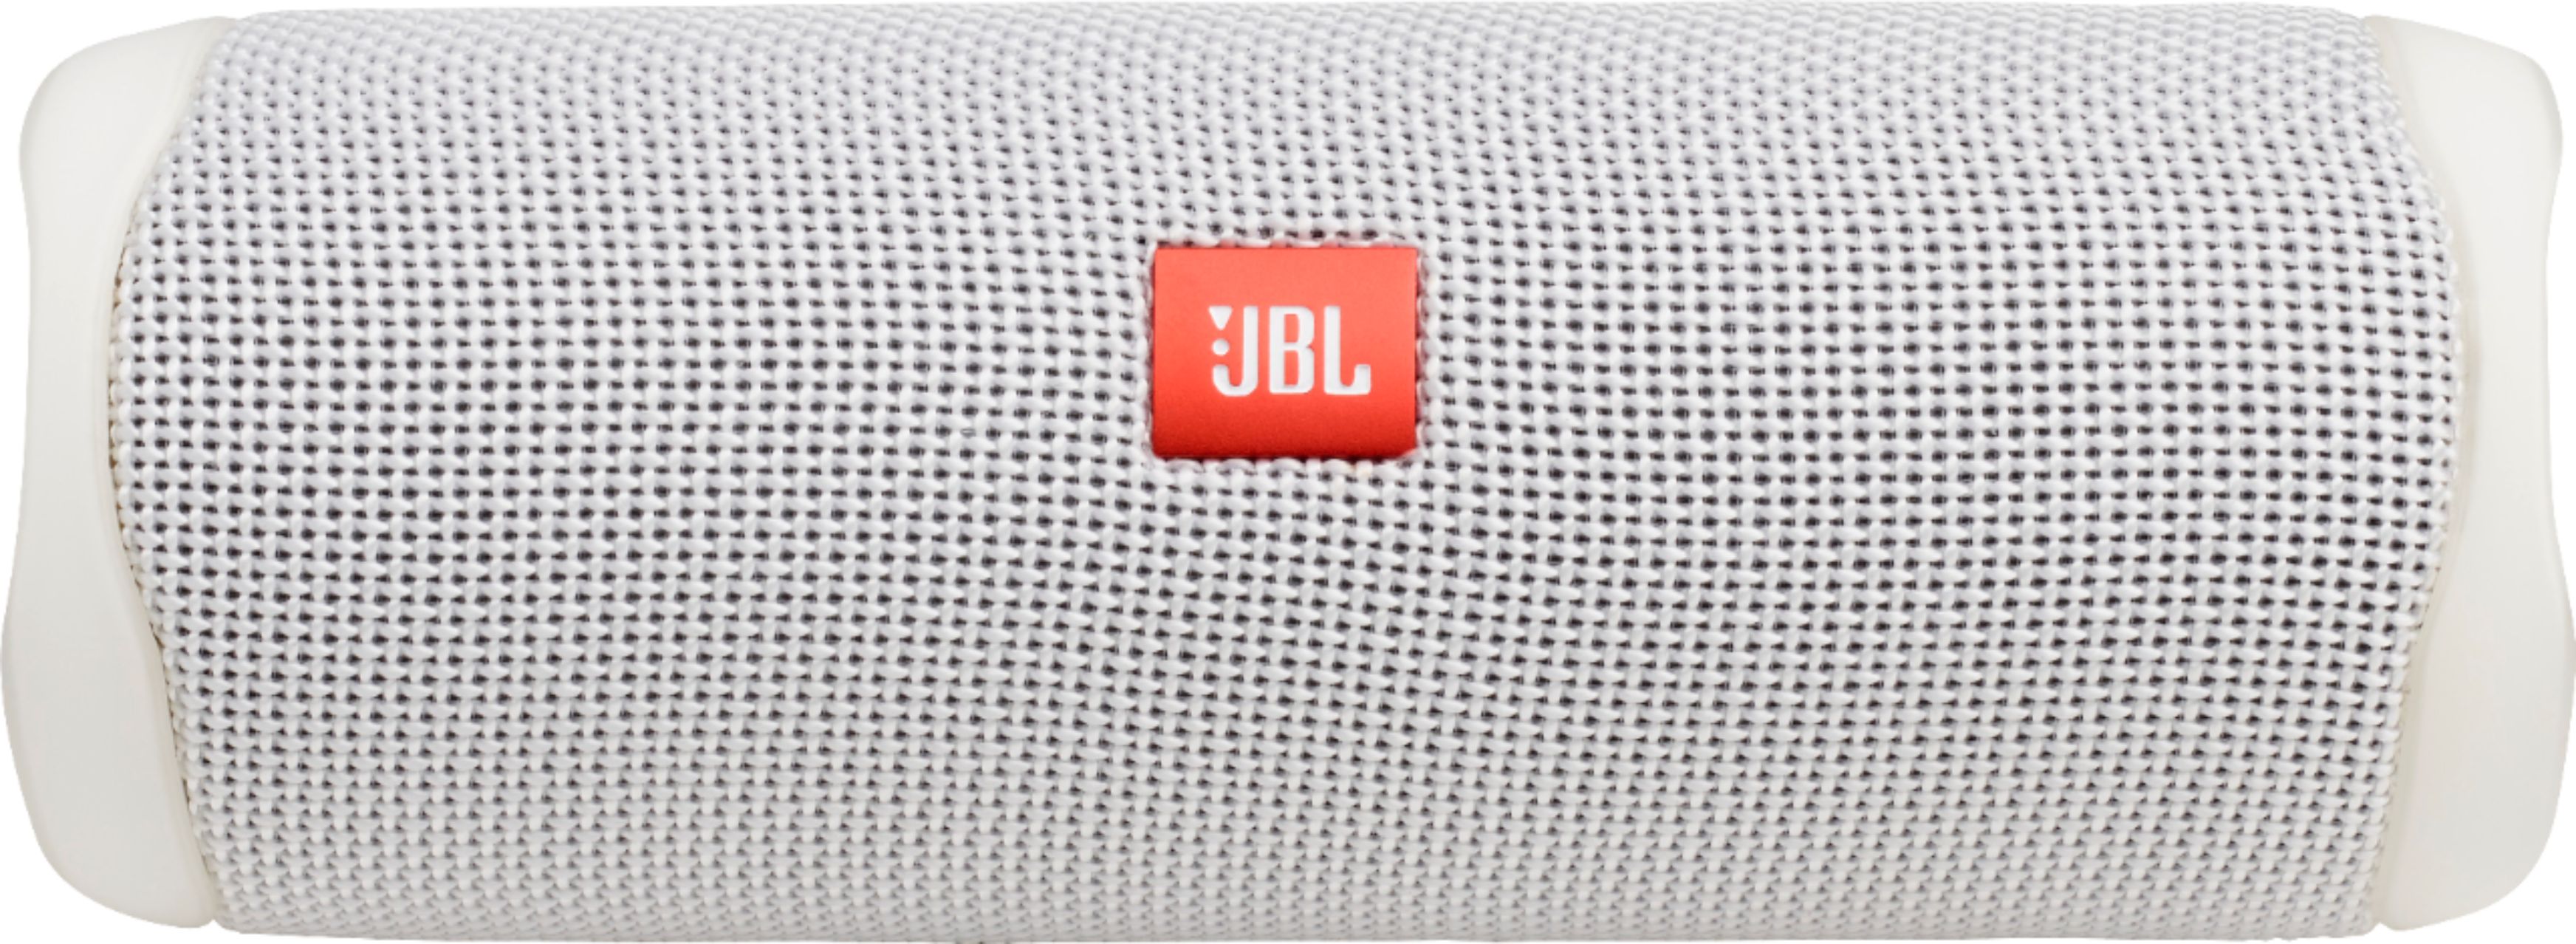 Best Buy: JBL Flip 5 Portable Bluetooth Speaker White Steel JBLFLIP5WHTAM